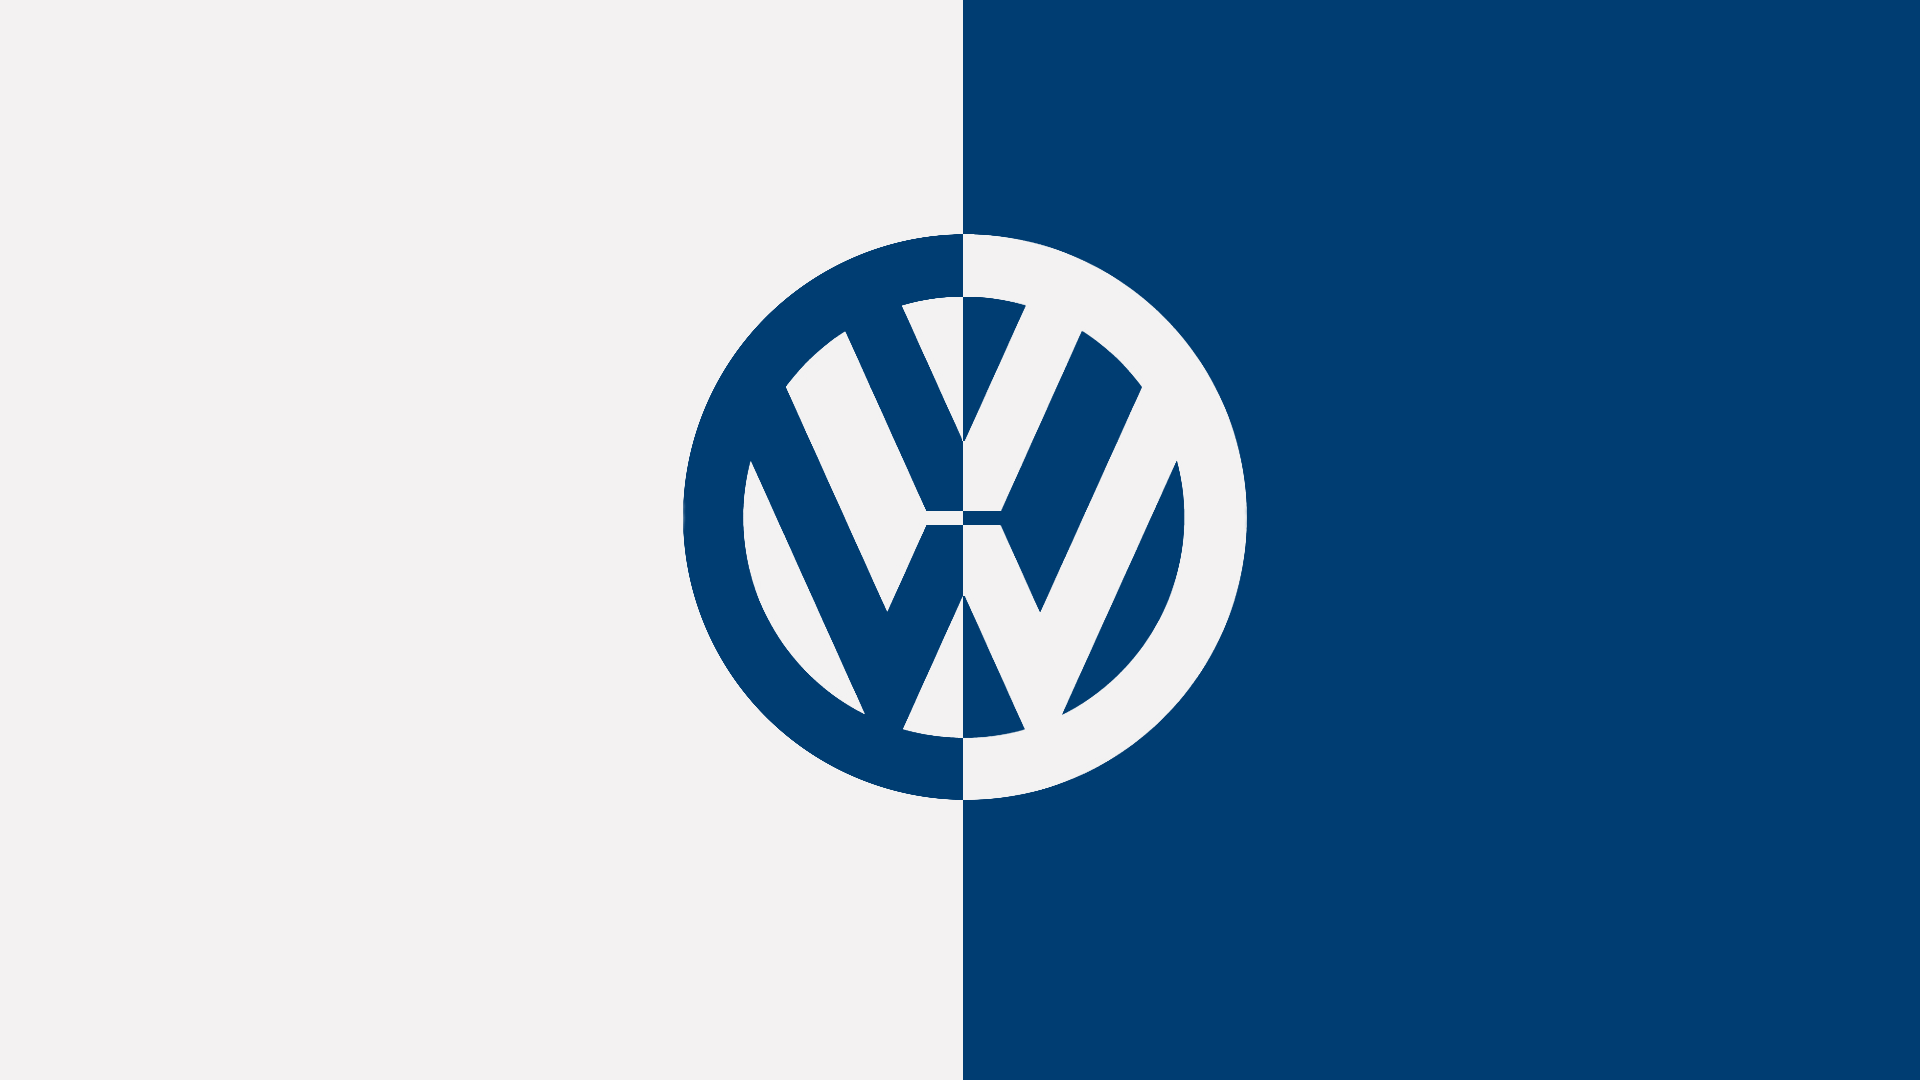 Very Minimalistic Volkswagen Wallpaper Wip Need To Get Rid Of